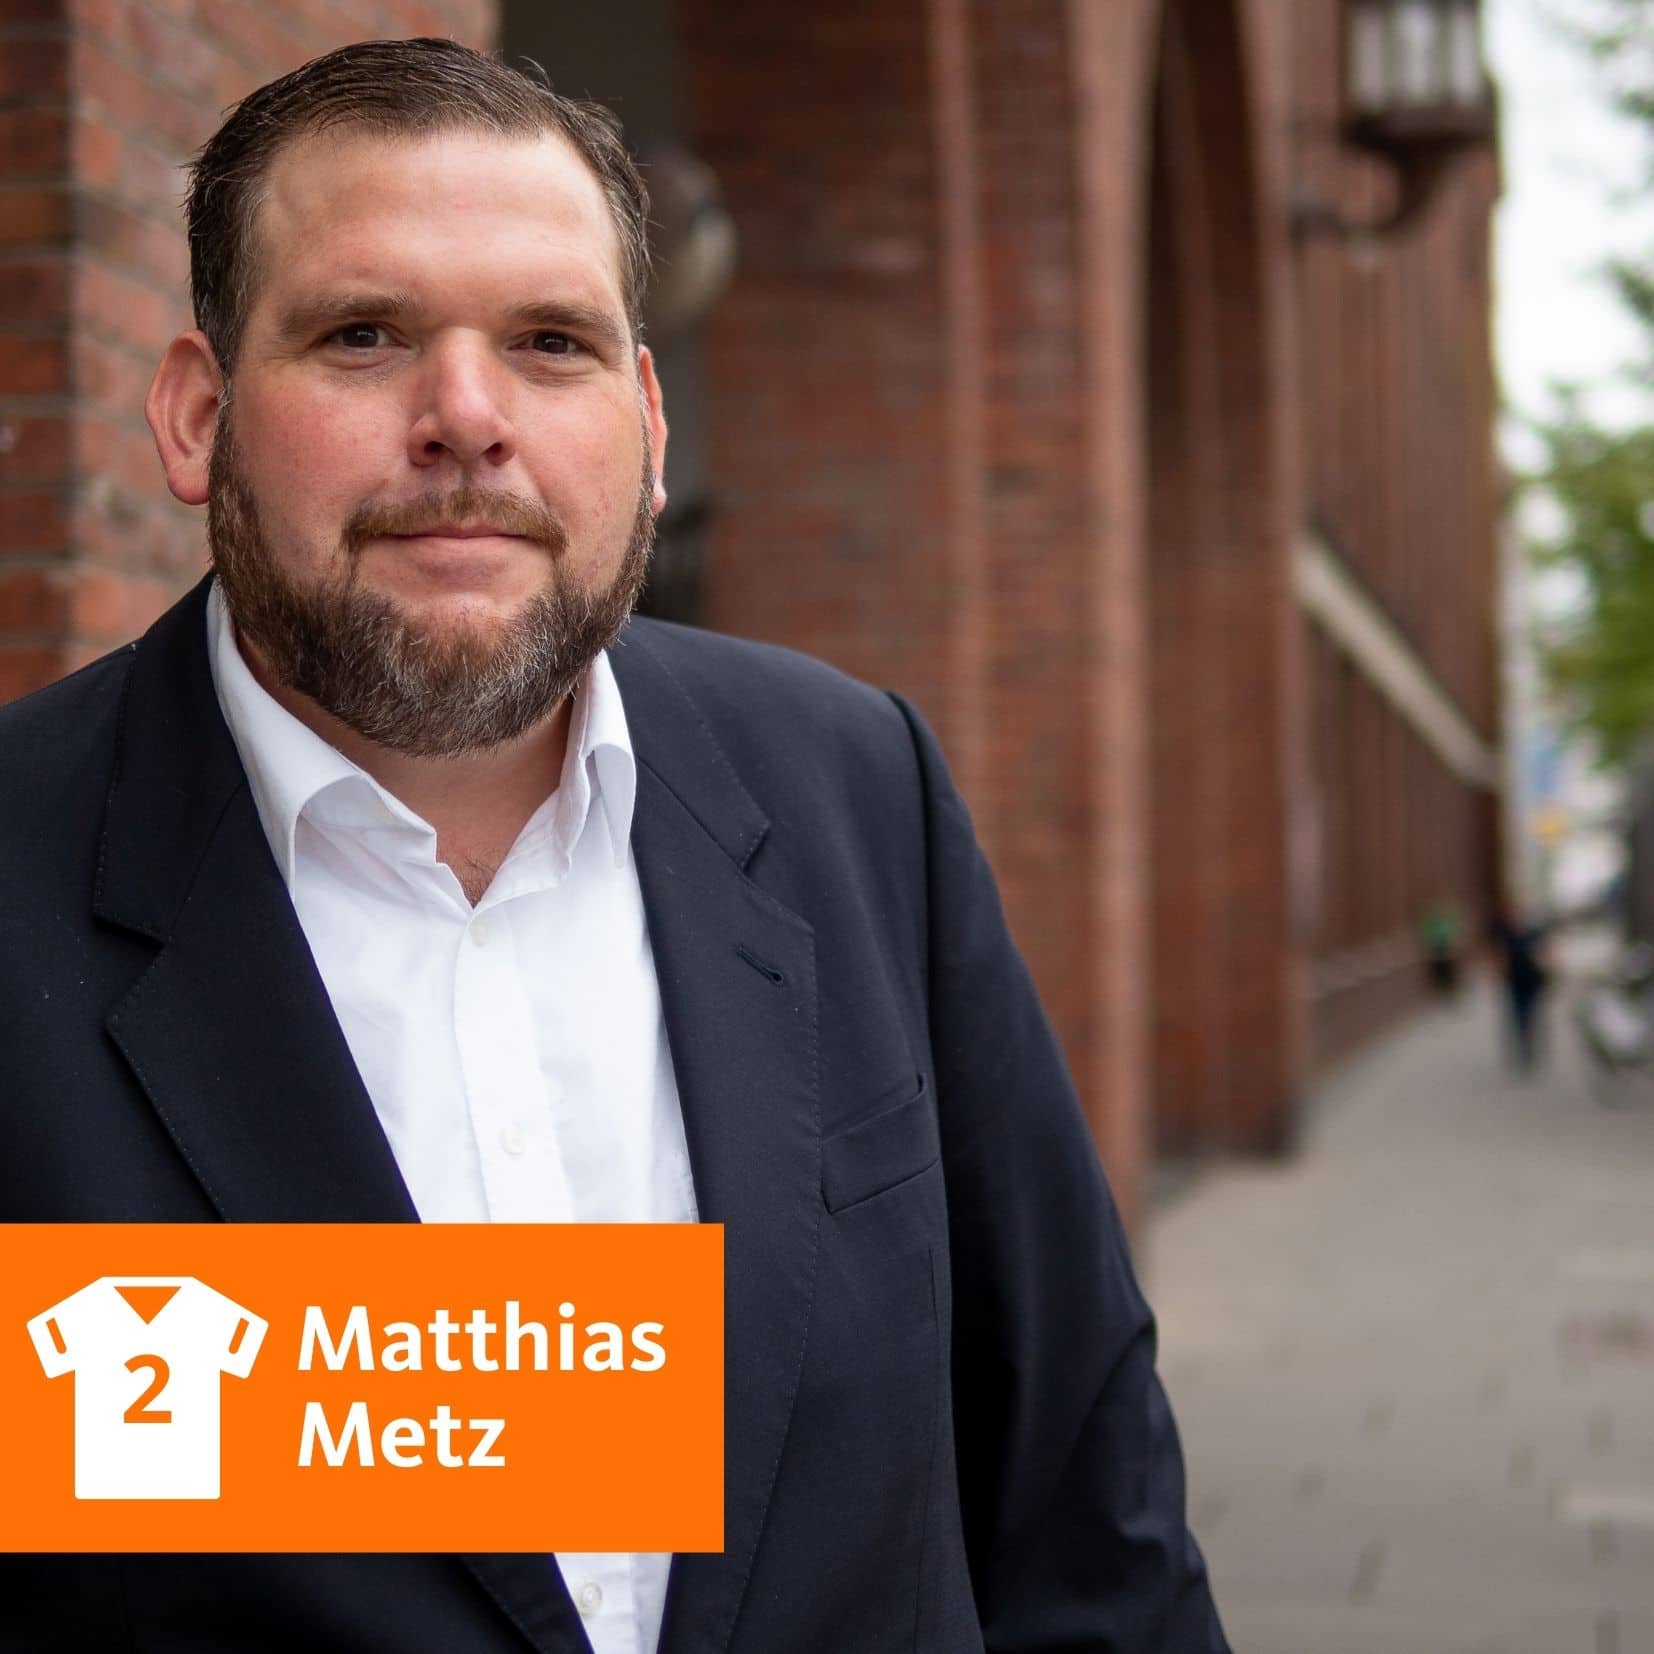 Matthias Metz